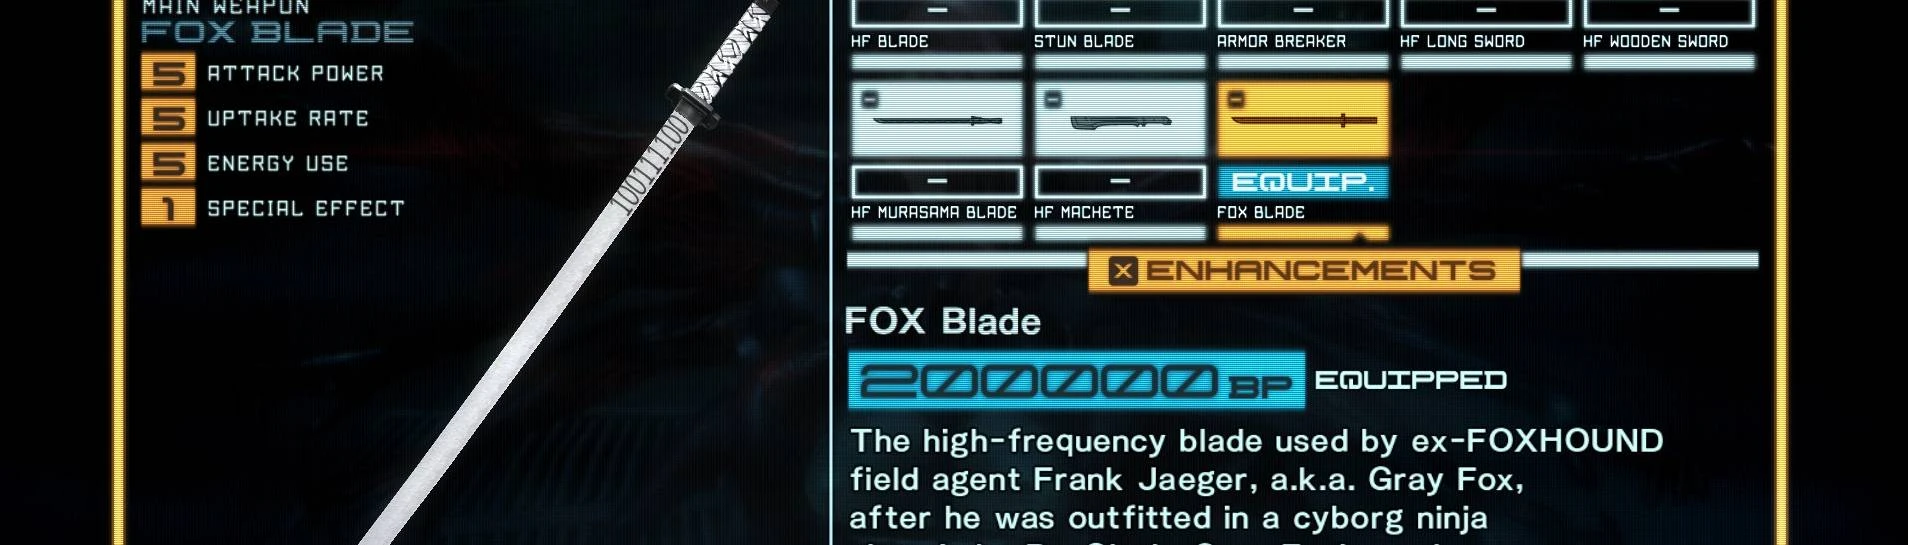 Binary Sword (Madness Combat) [Metal Gear Rising: Revengeance] [Mods]